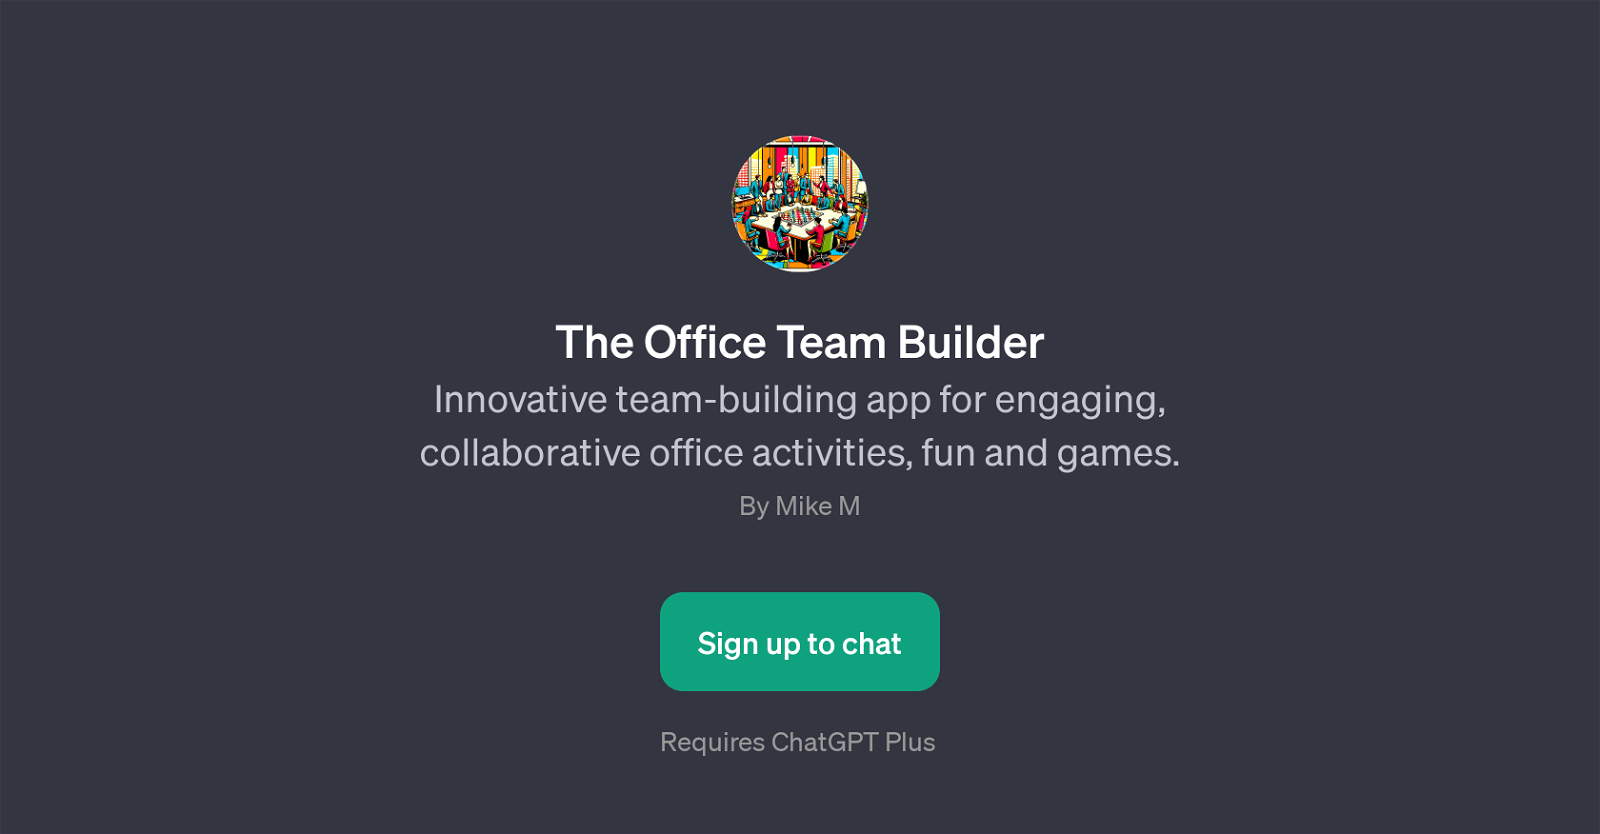 The Office Team Builder website